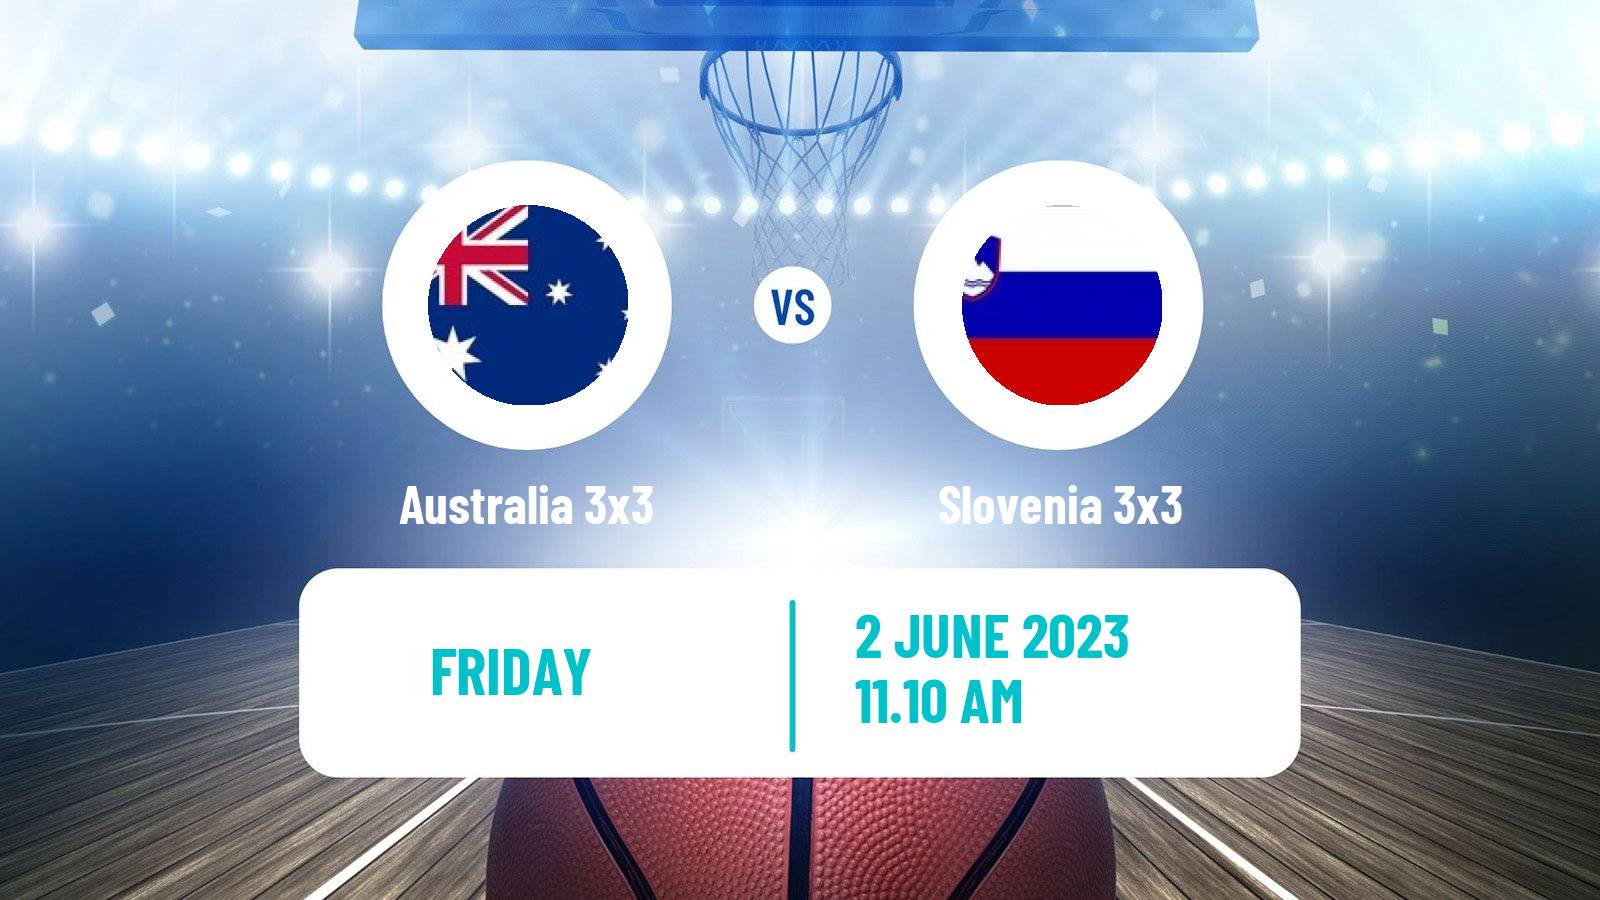 Basketball World Cup Basketball 3x3 Australia 3x3 - Slovenia 3x3